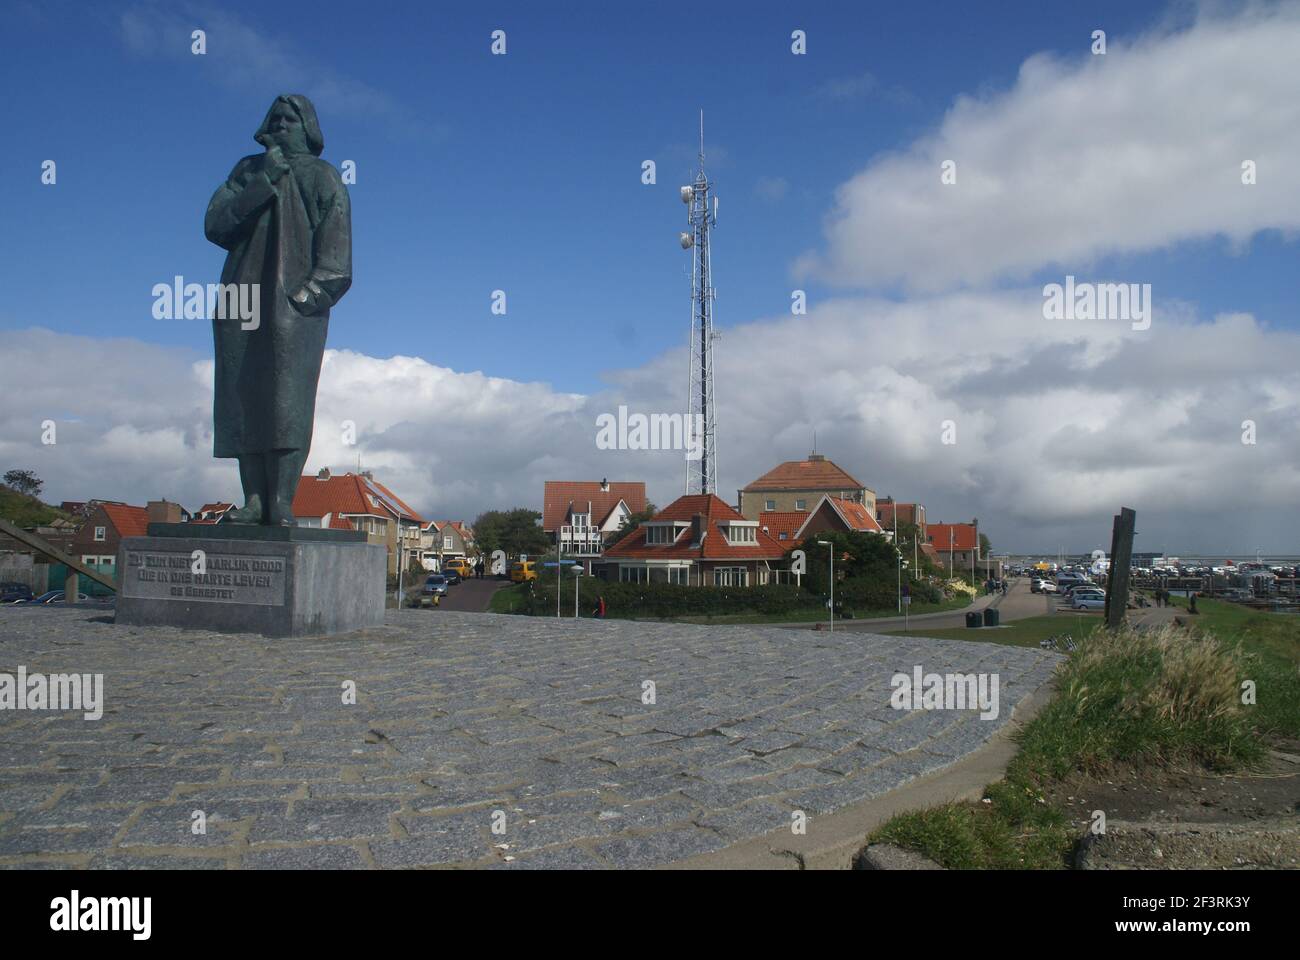 Statue (Artist: Gosse Dam) near the harbour of West Terschelling Stock Photo